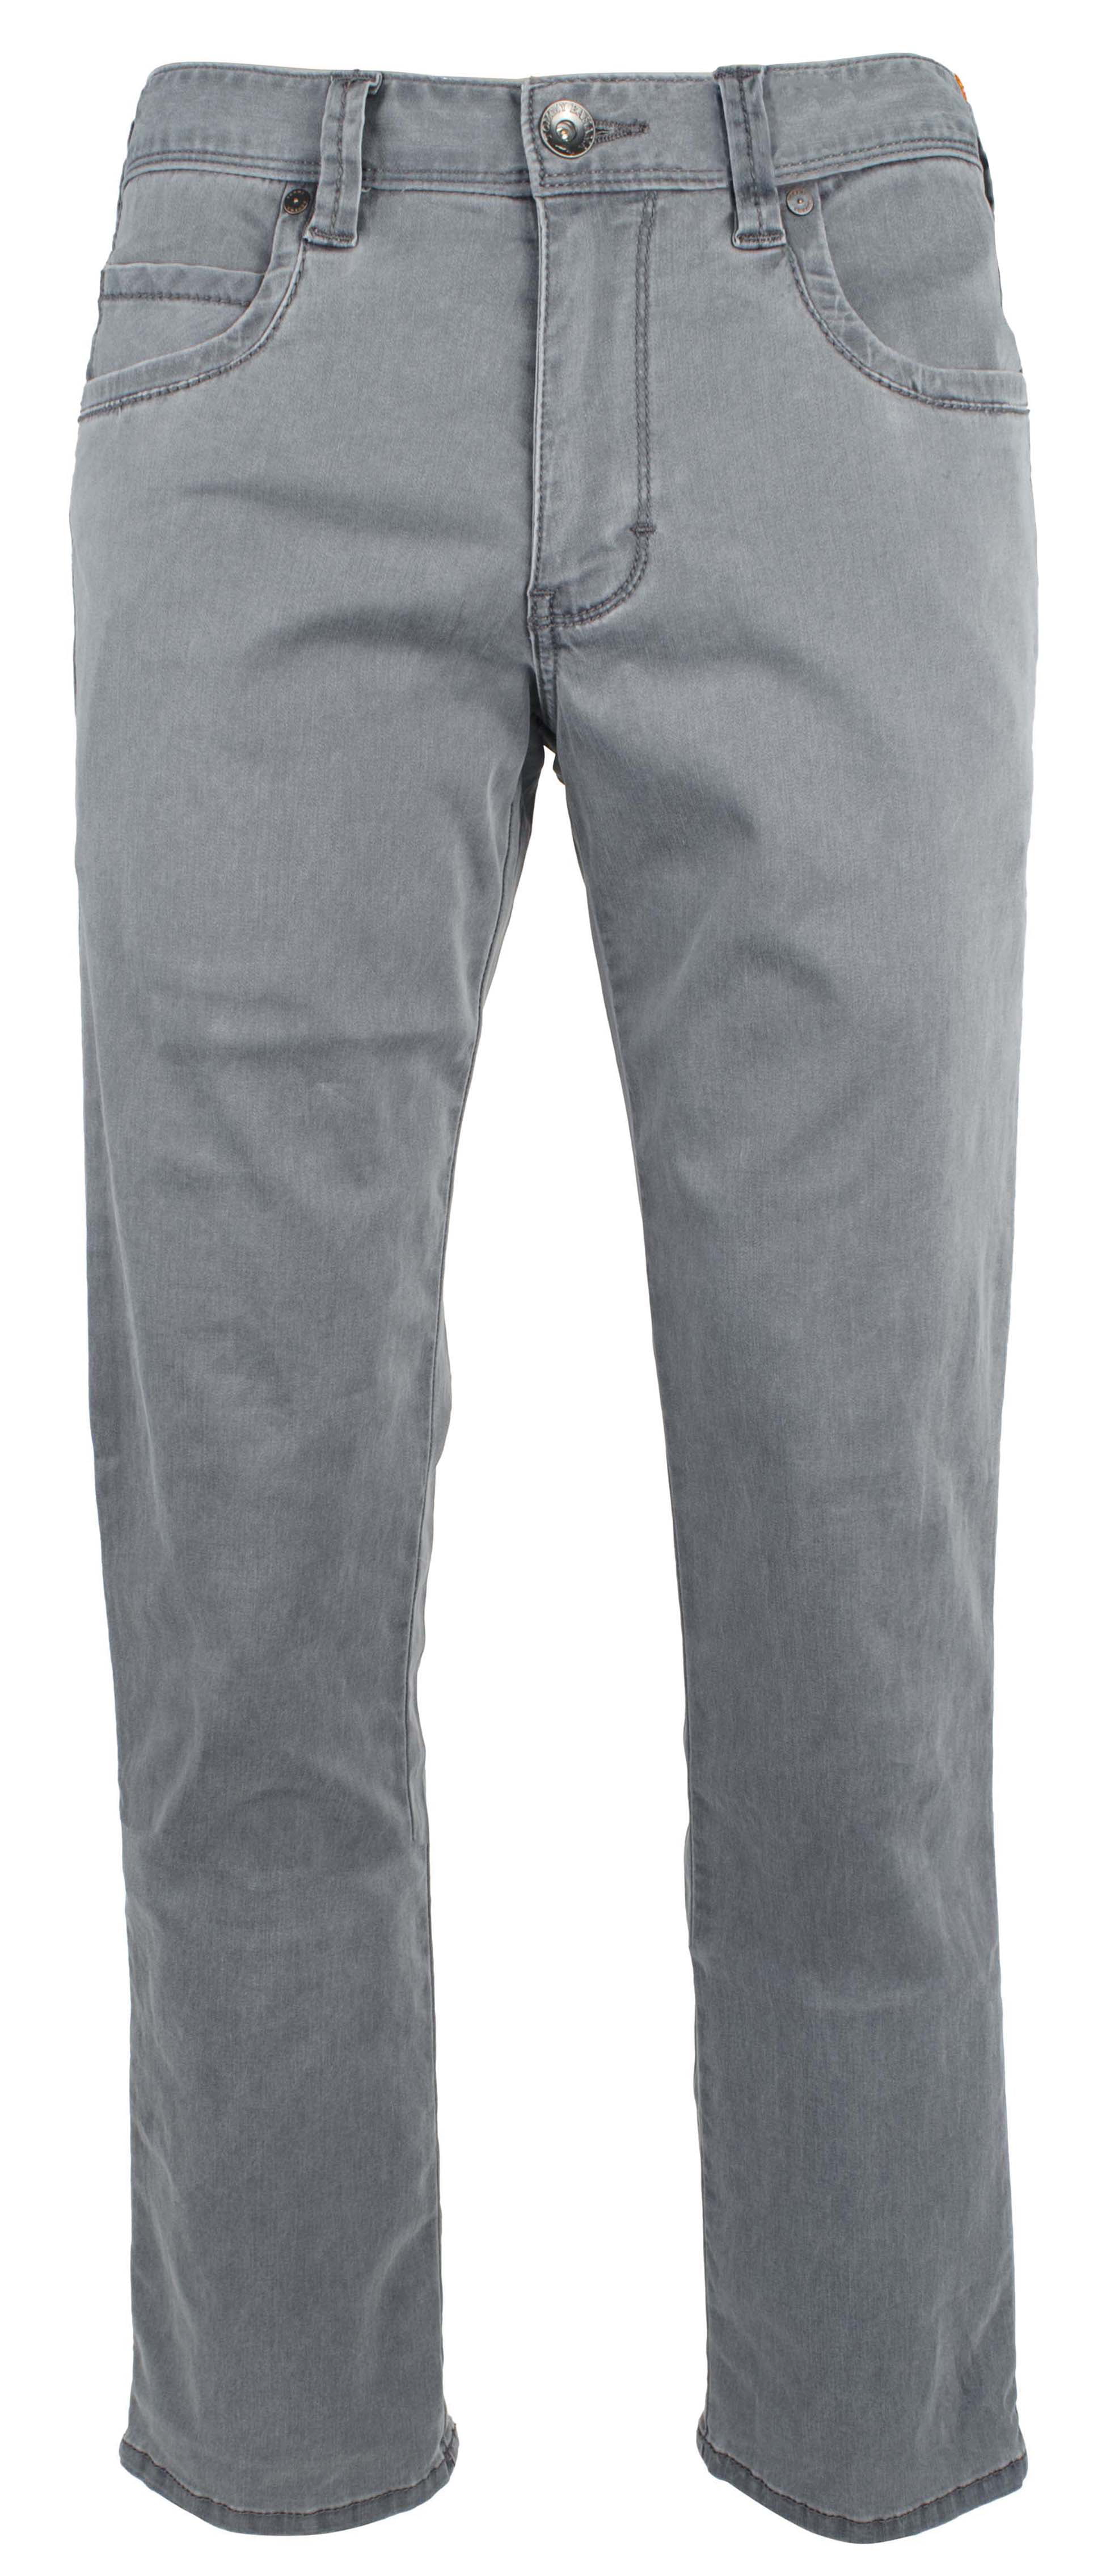 Boracay 5 Pocket Chino Pants - Walmart 